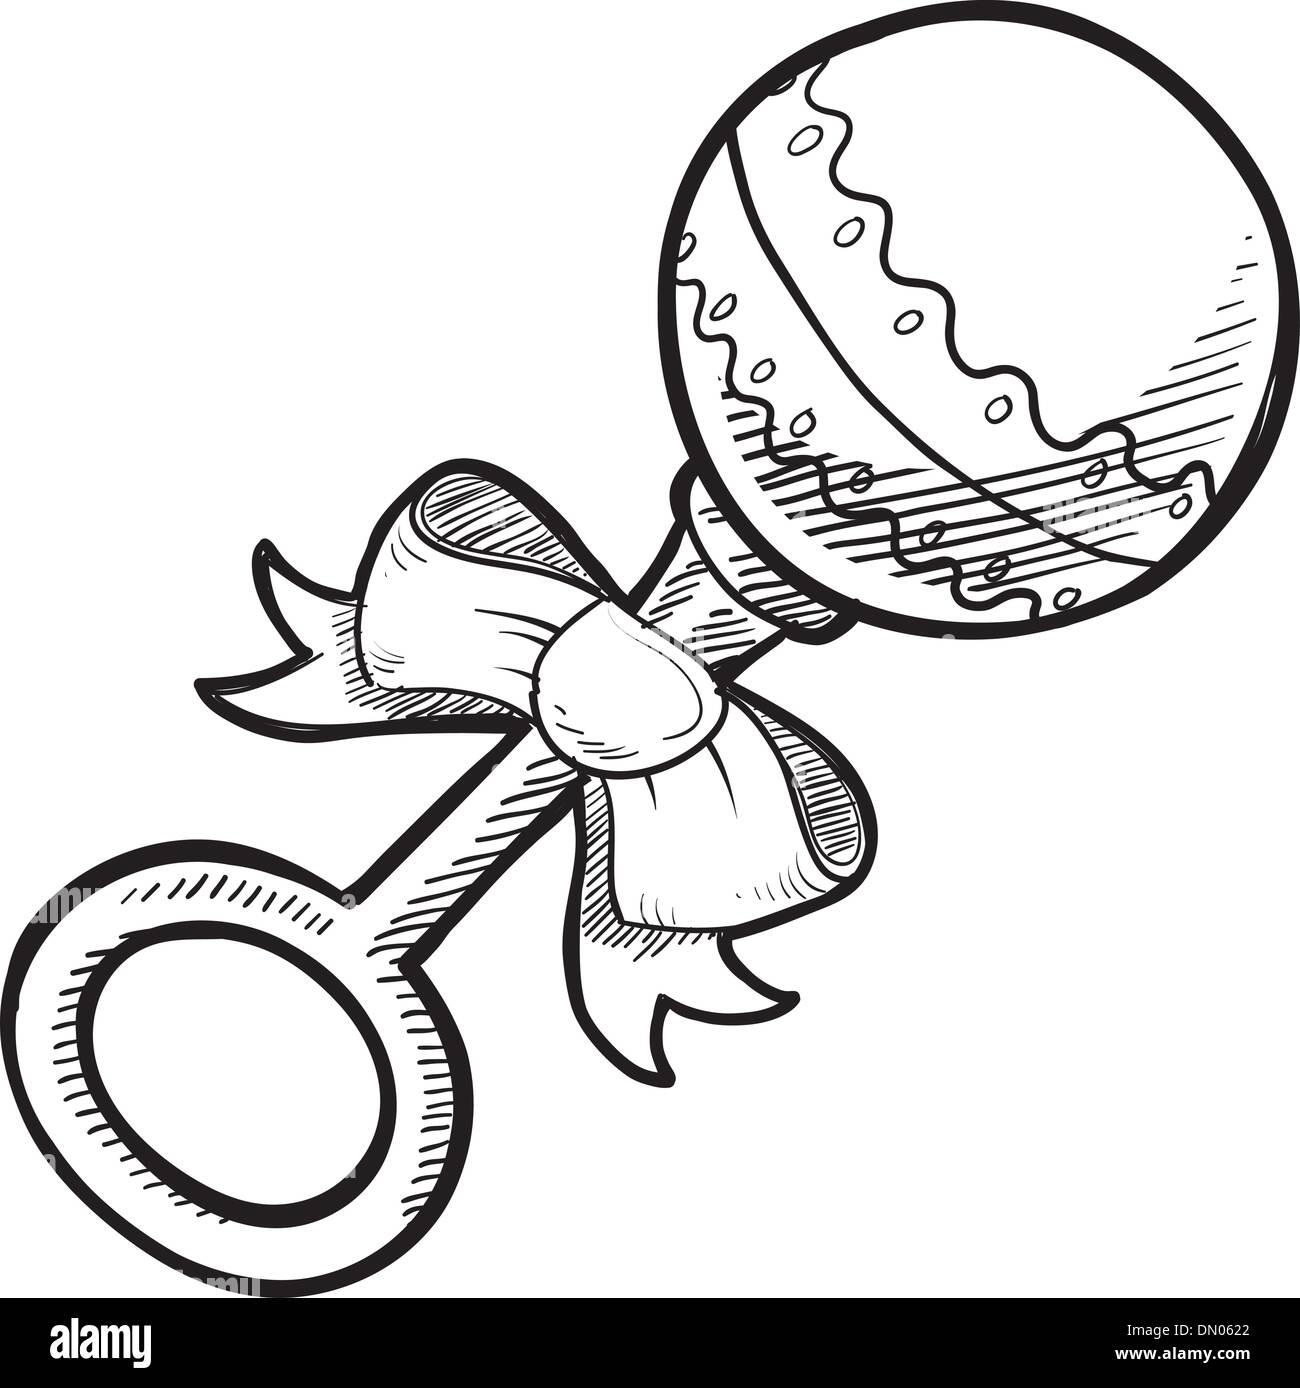 Baby rattle sketch Stock Vector Art & Illustration, Vector Image